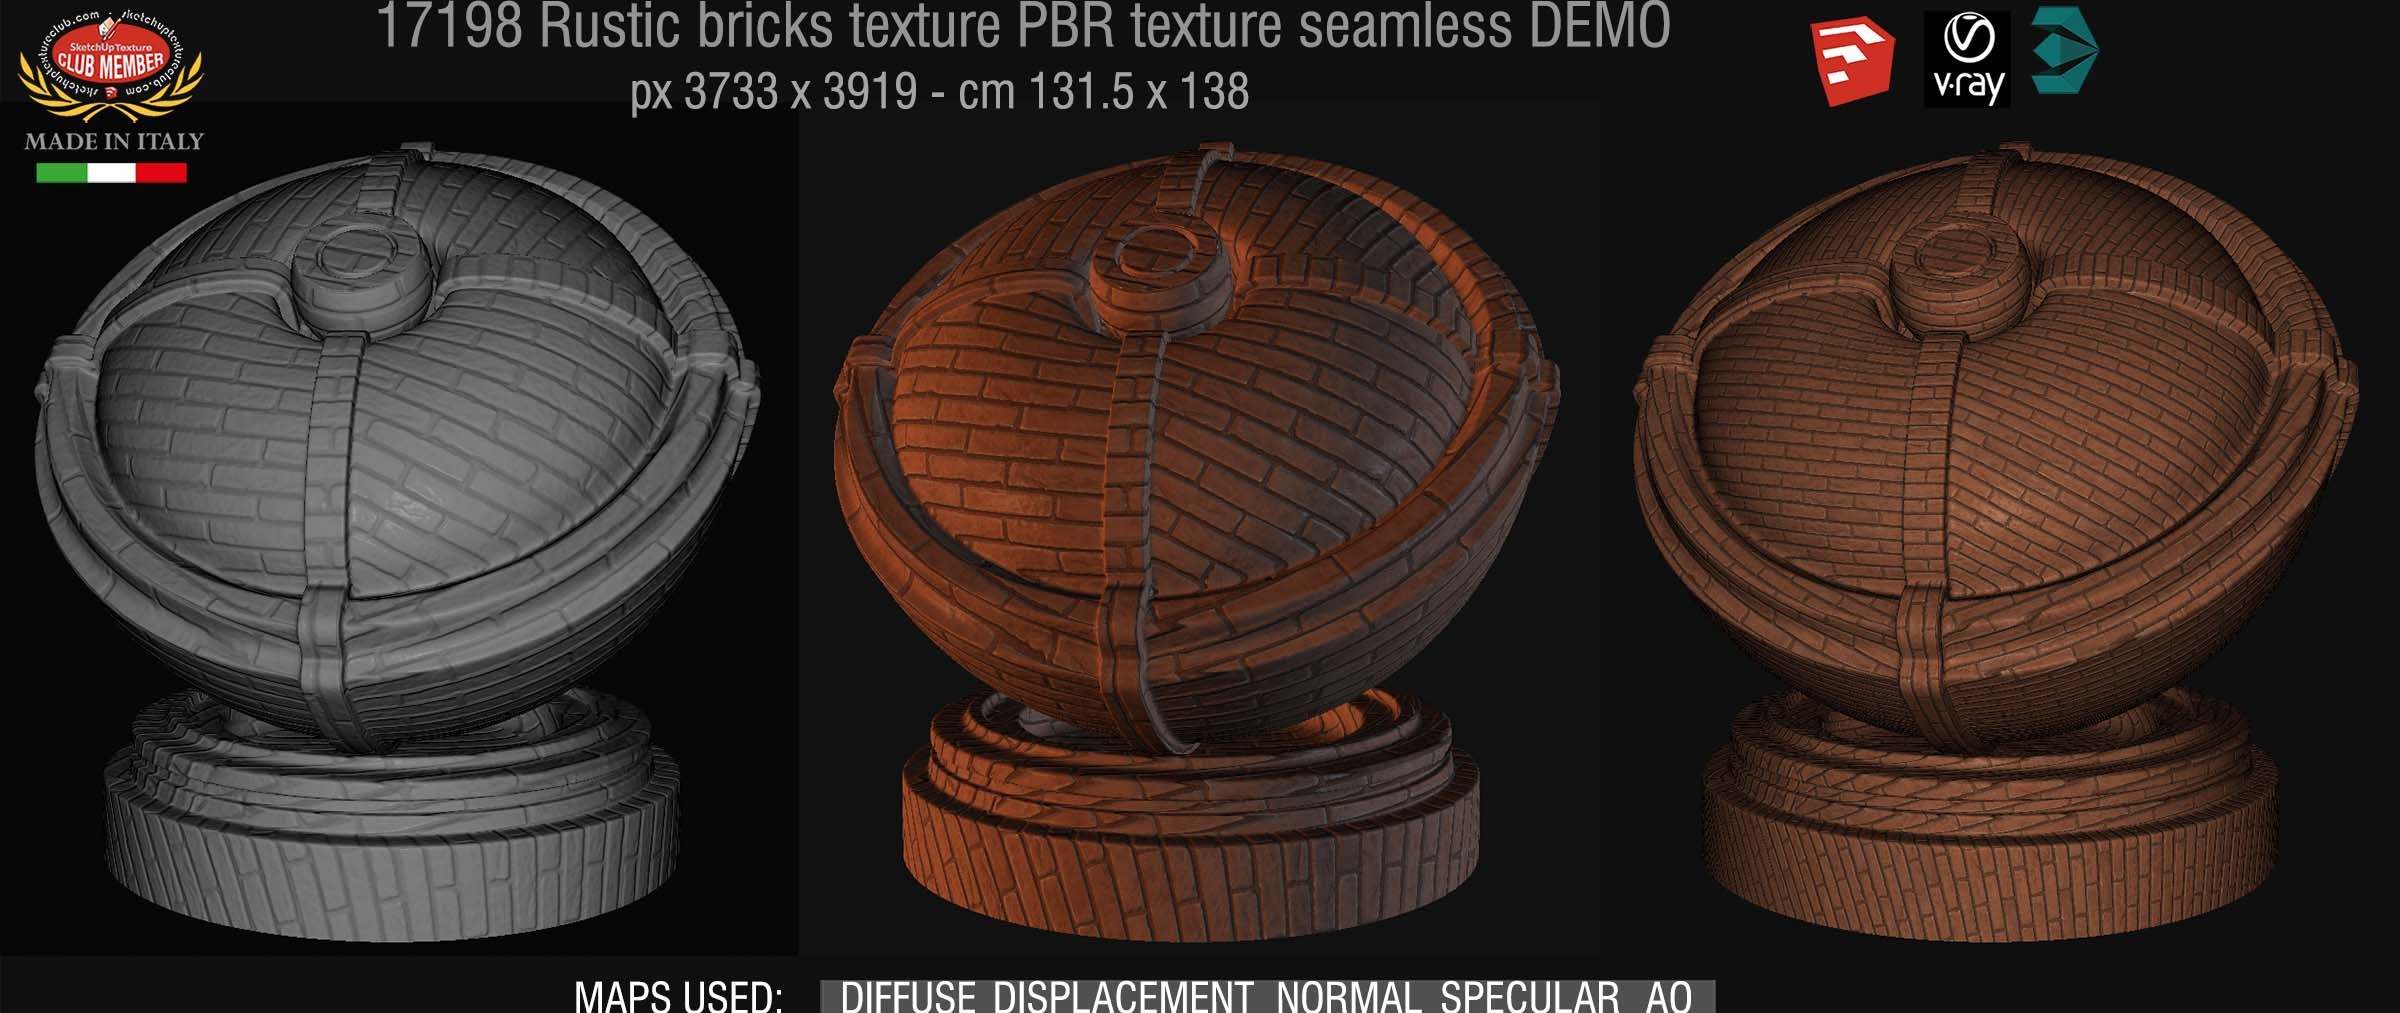 17198 rustic bricks PBR texture seamless DEMO